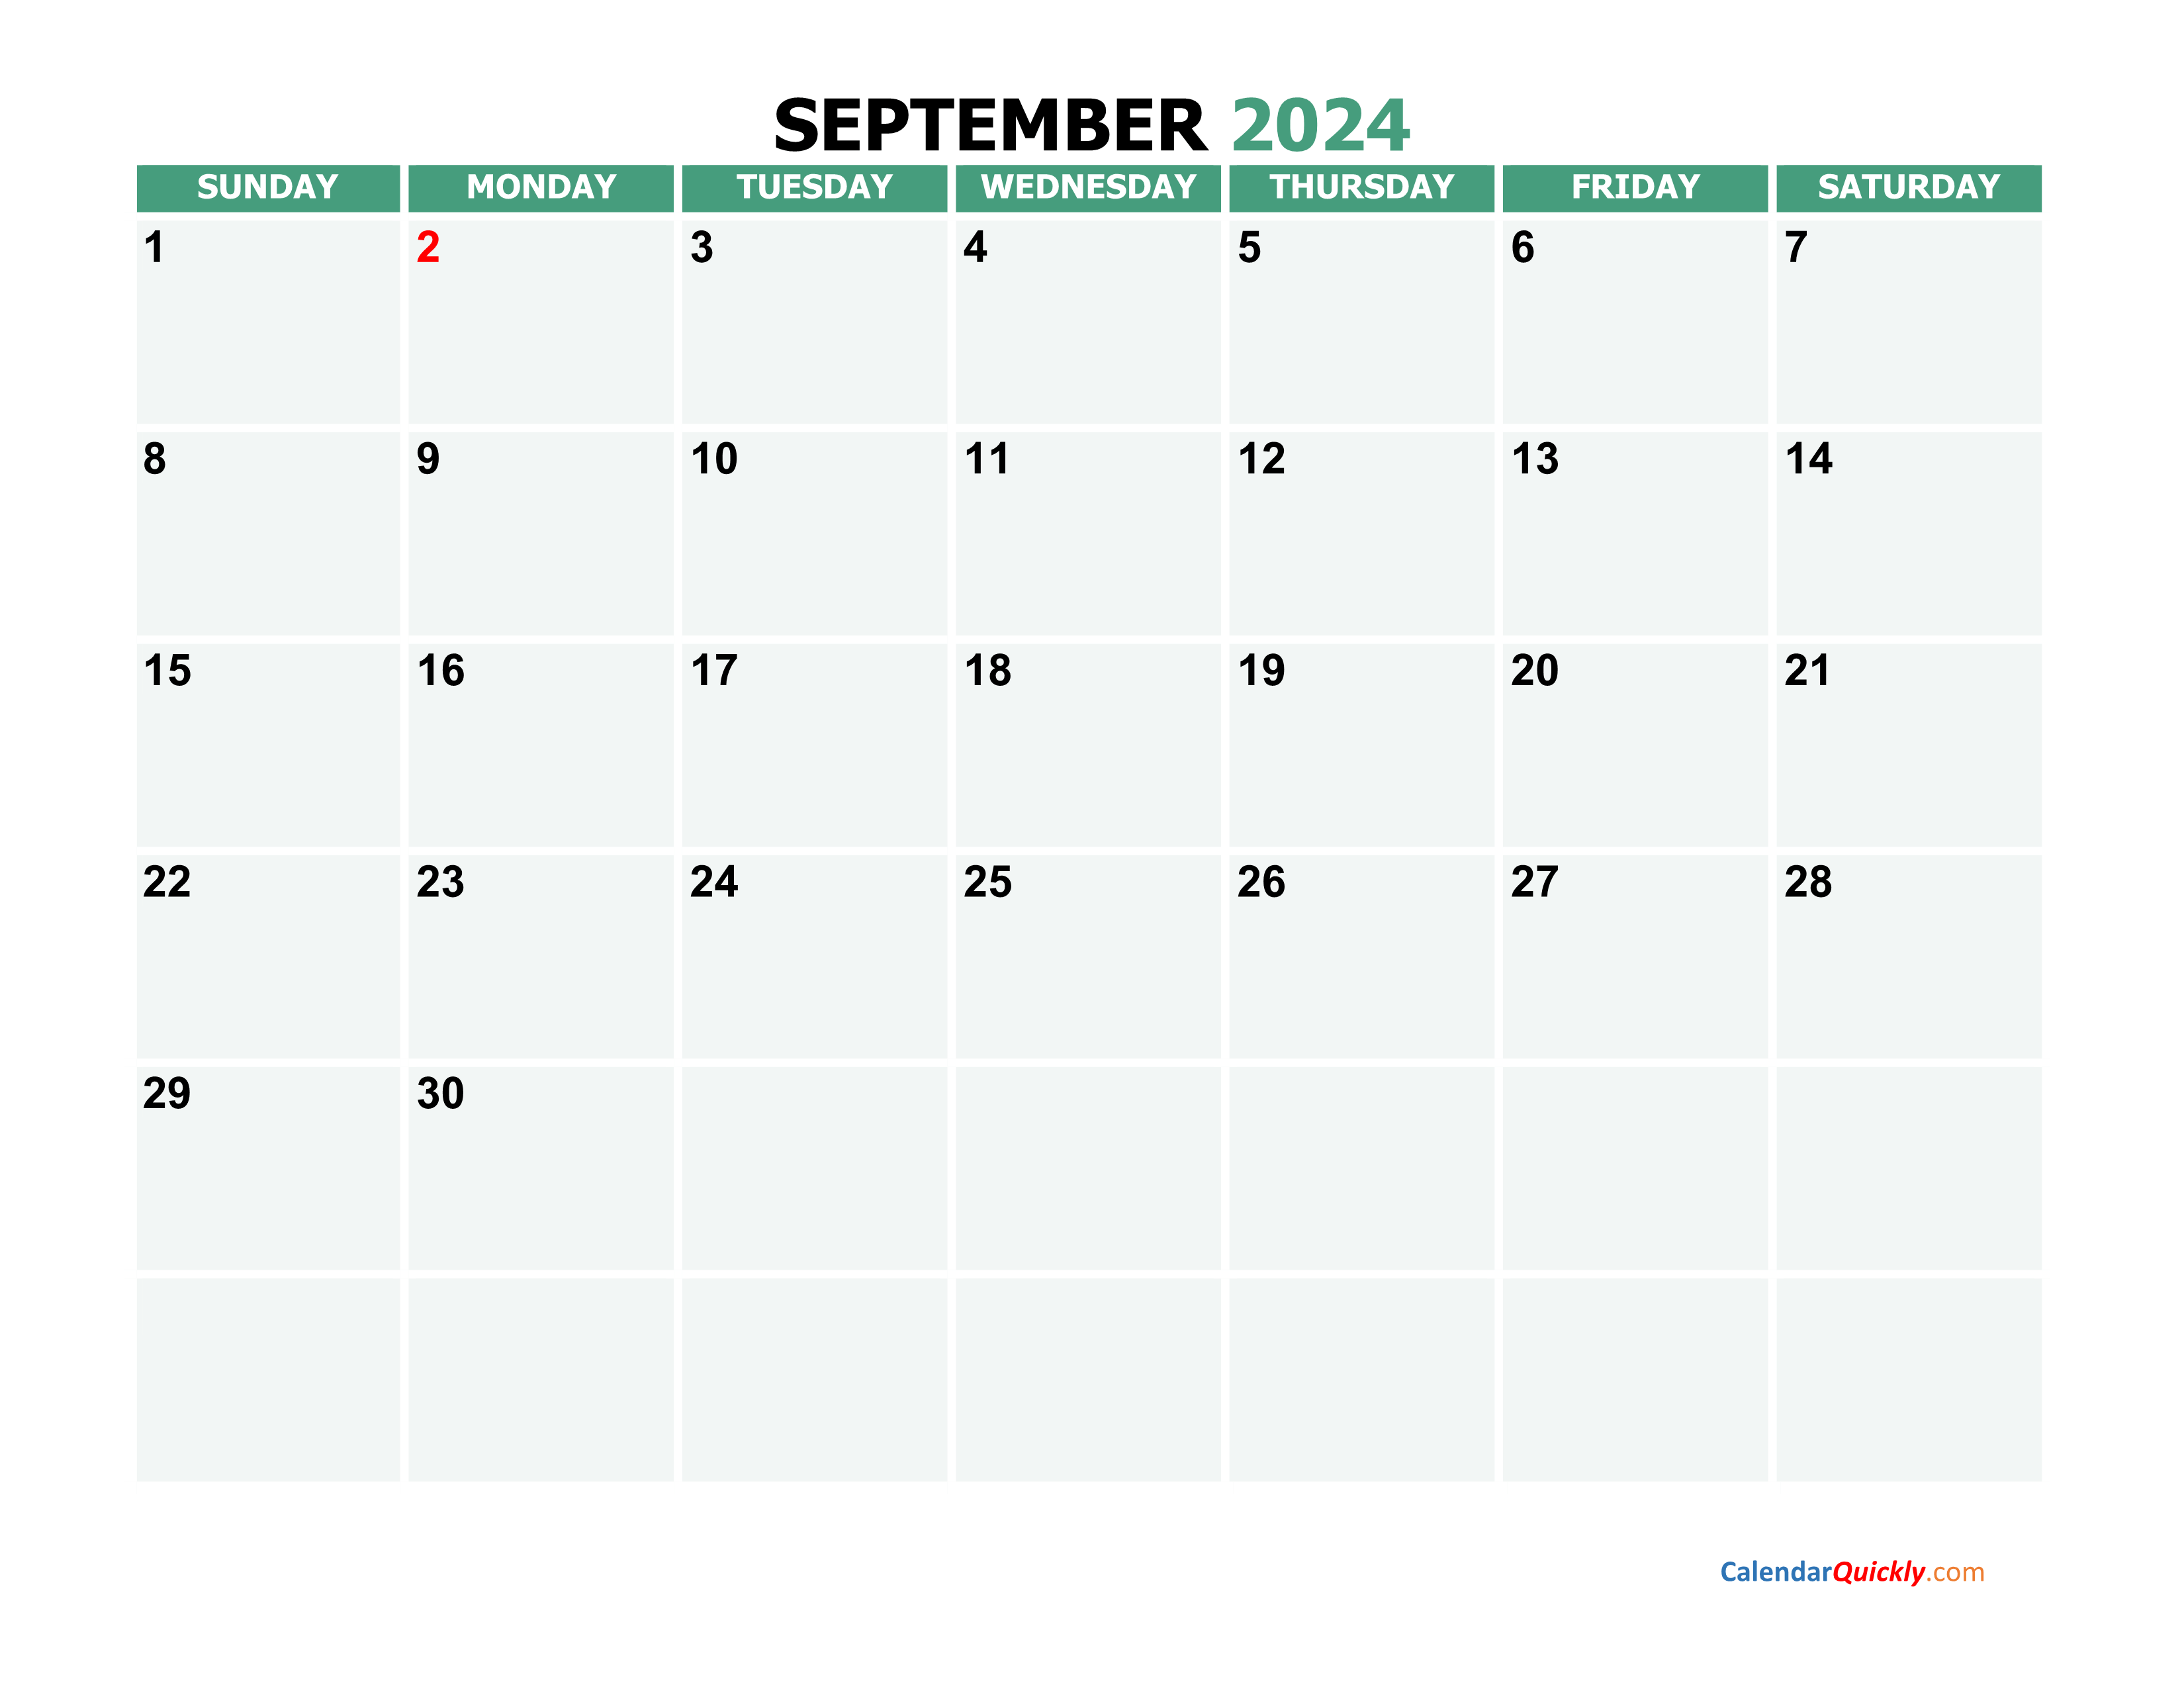 september-2024-calendars-calendar-quickly